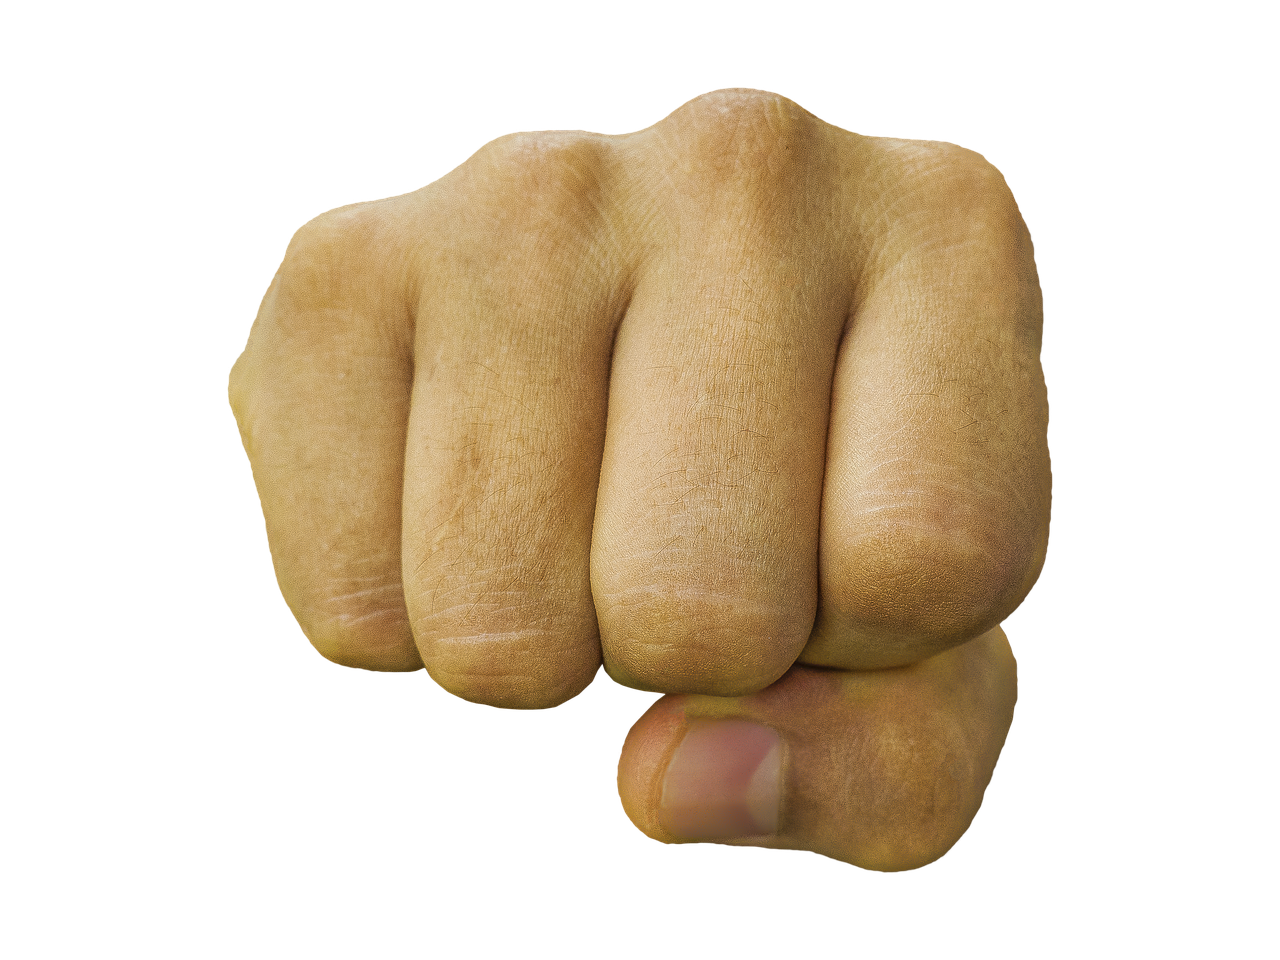 Hand Finger Fist Image File Formats Punch Png Download 1280960